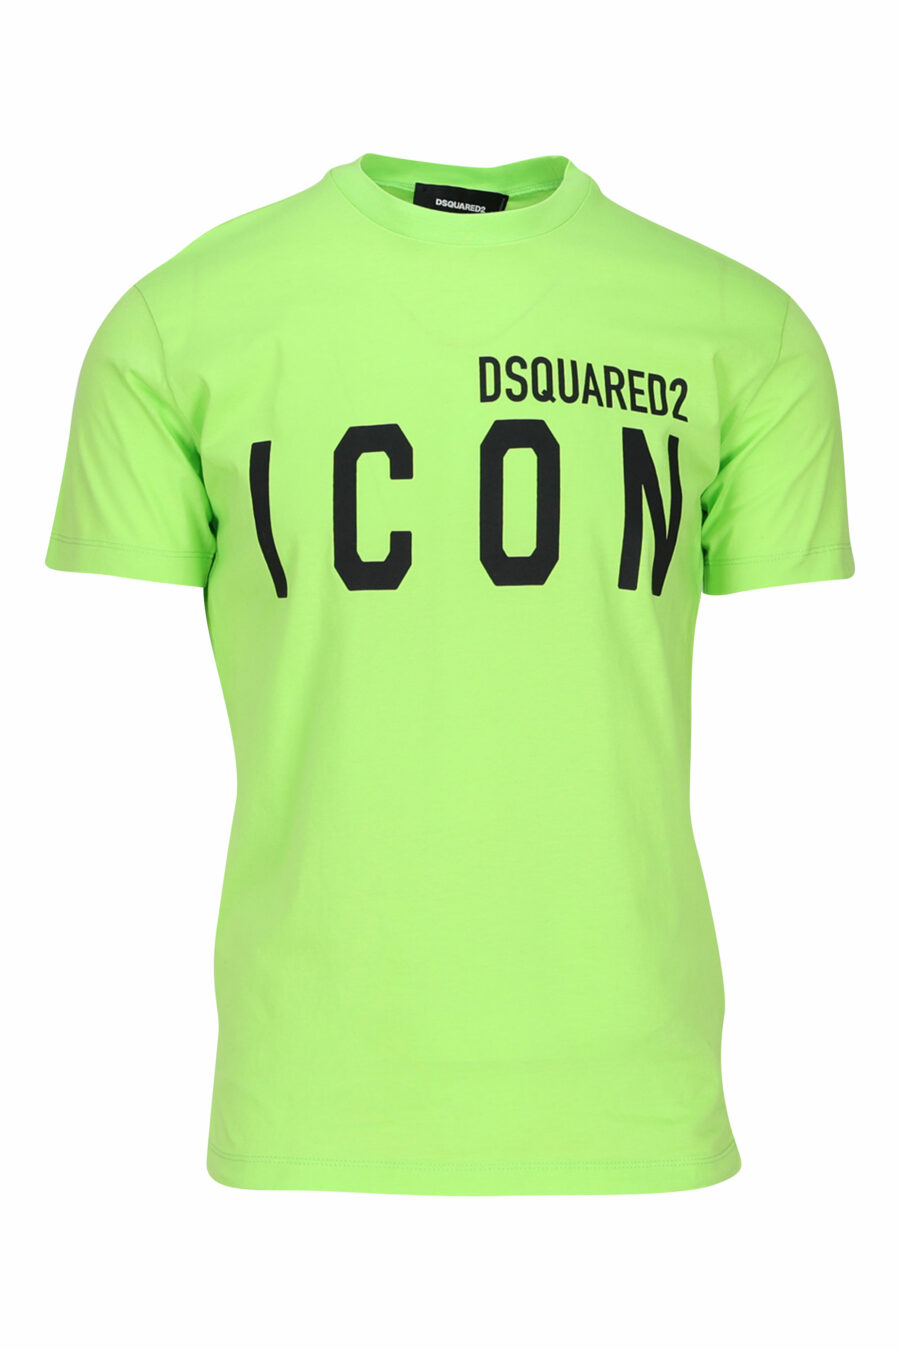 Limonengrünes T-Shirt mit schwarzem "Icon" Maxilogo - 8054148035594